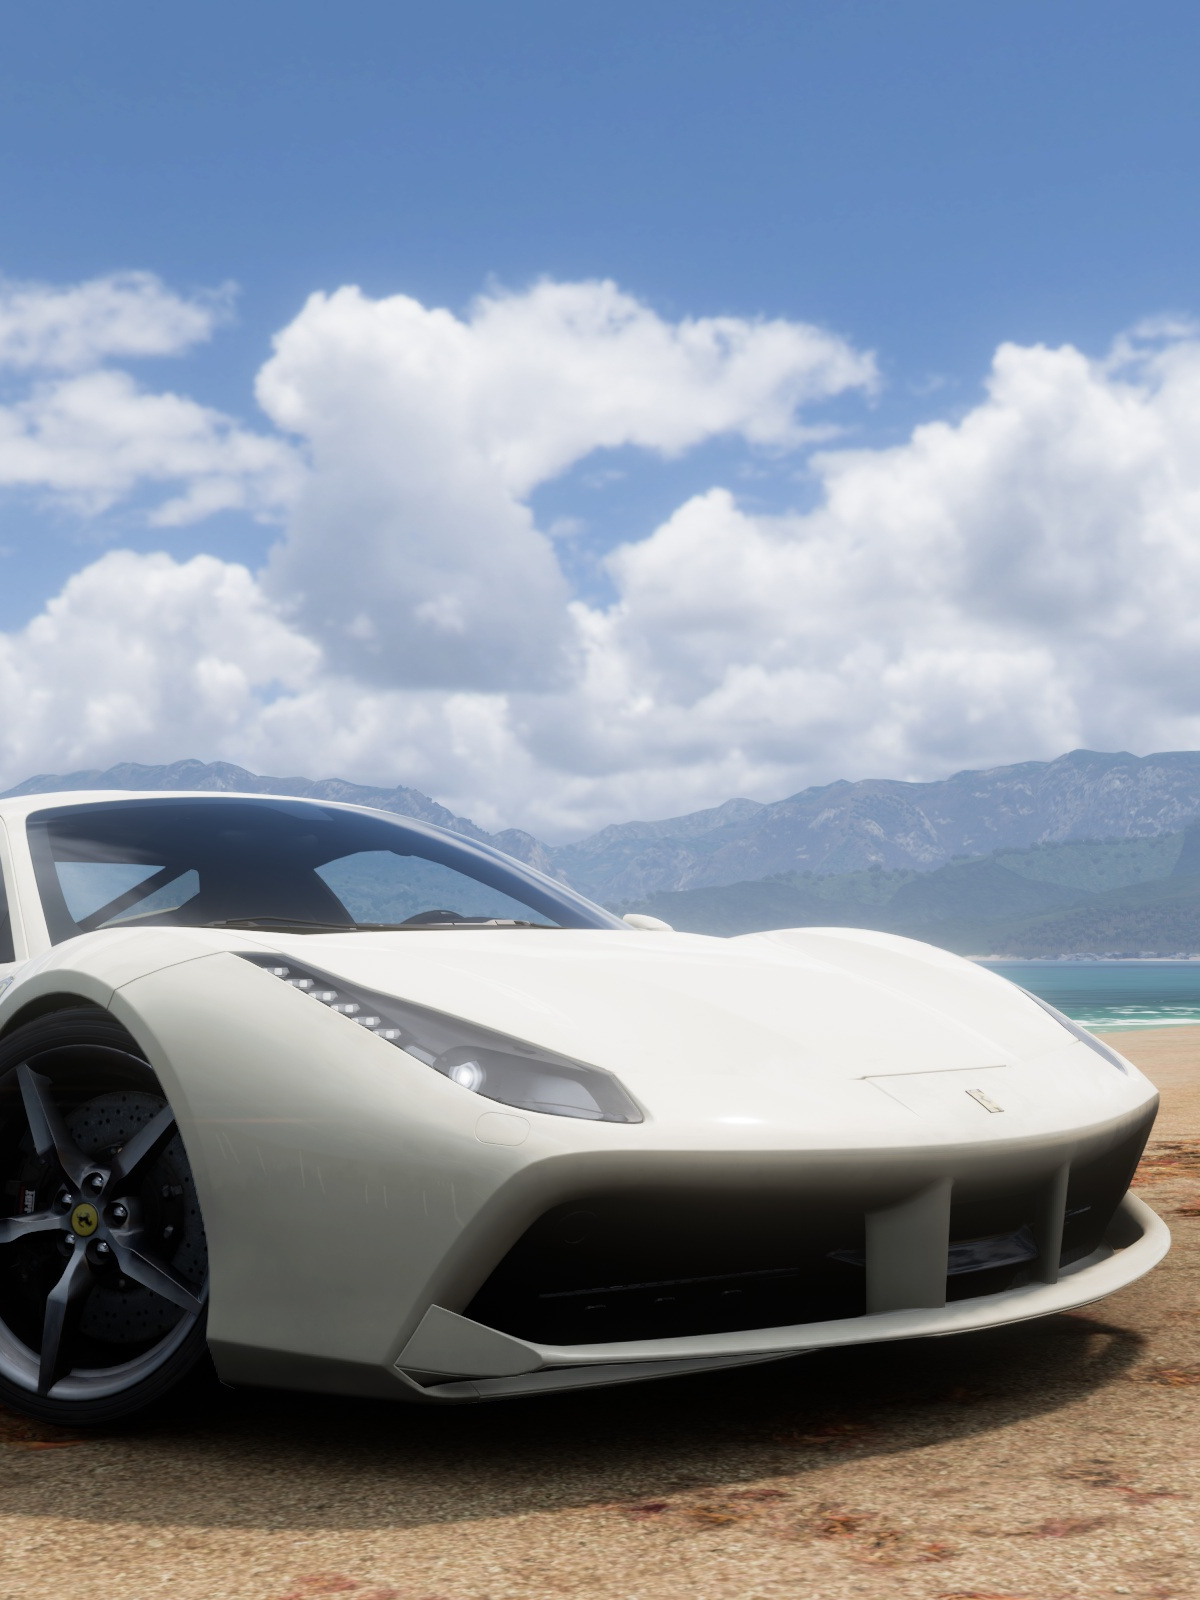 Download Wallpaper Car Ferrari Beach Water Clouds Sand Video